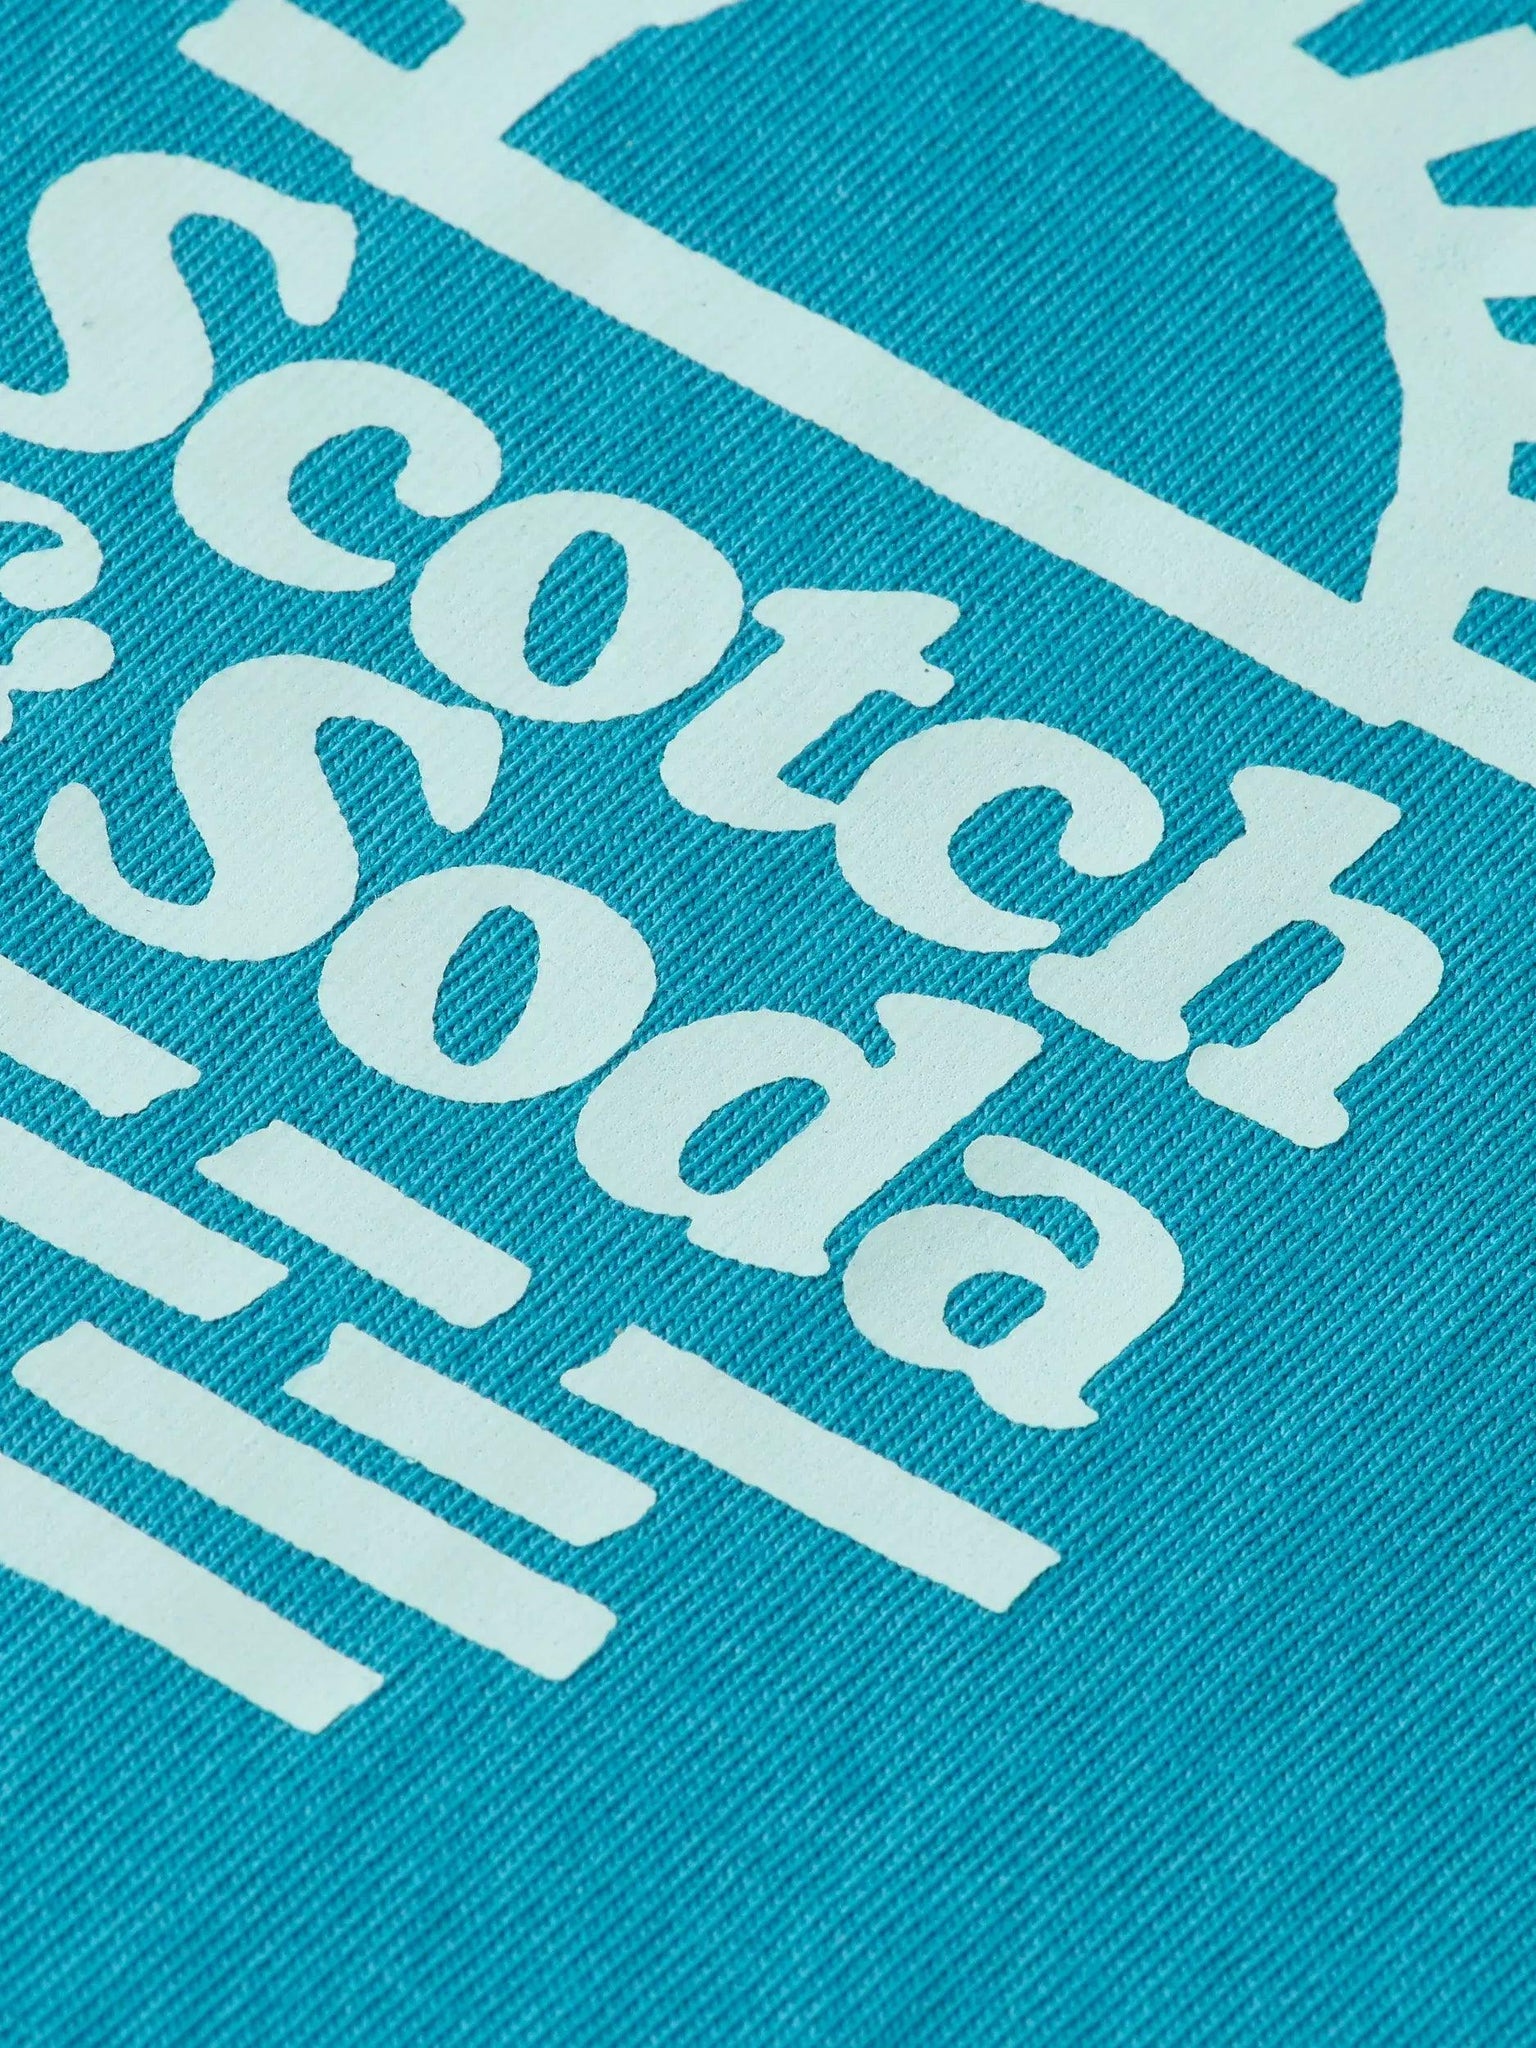 Camiseta Scotch & Soda Left Chest Artwork Petrol Blue - ECRU